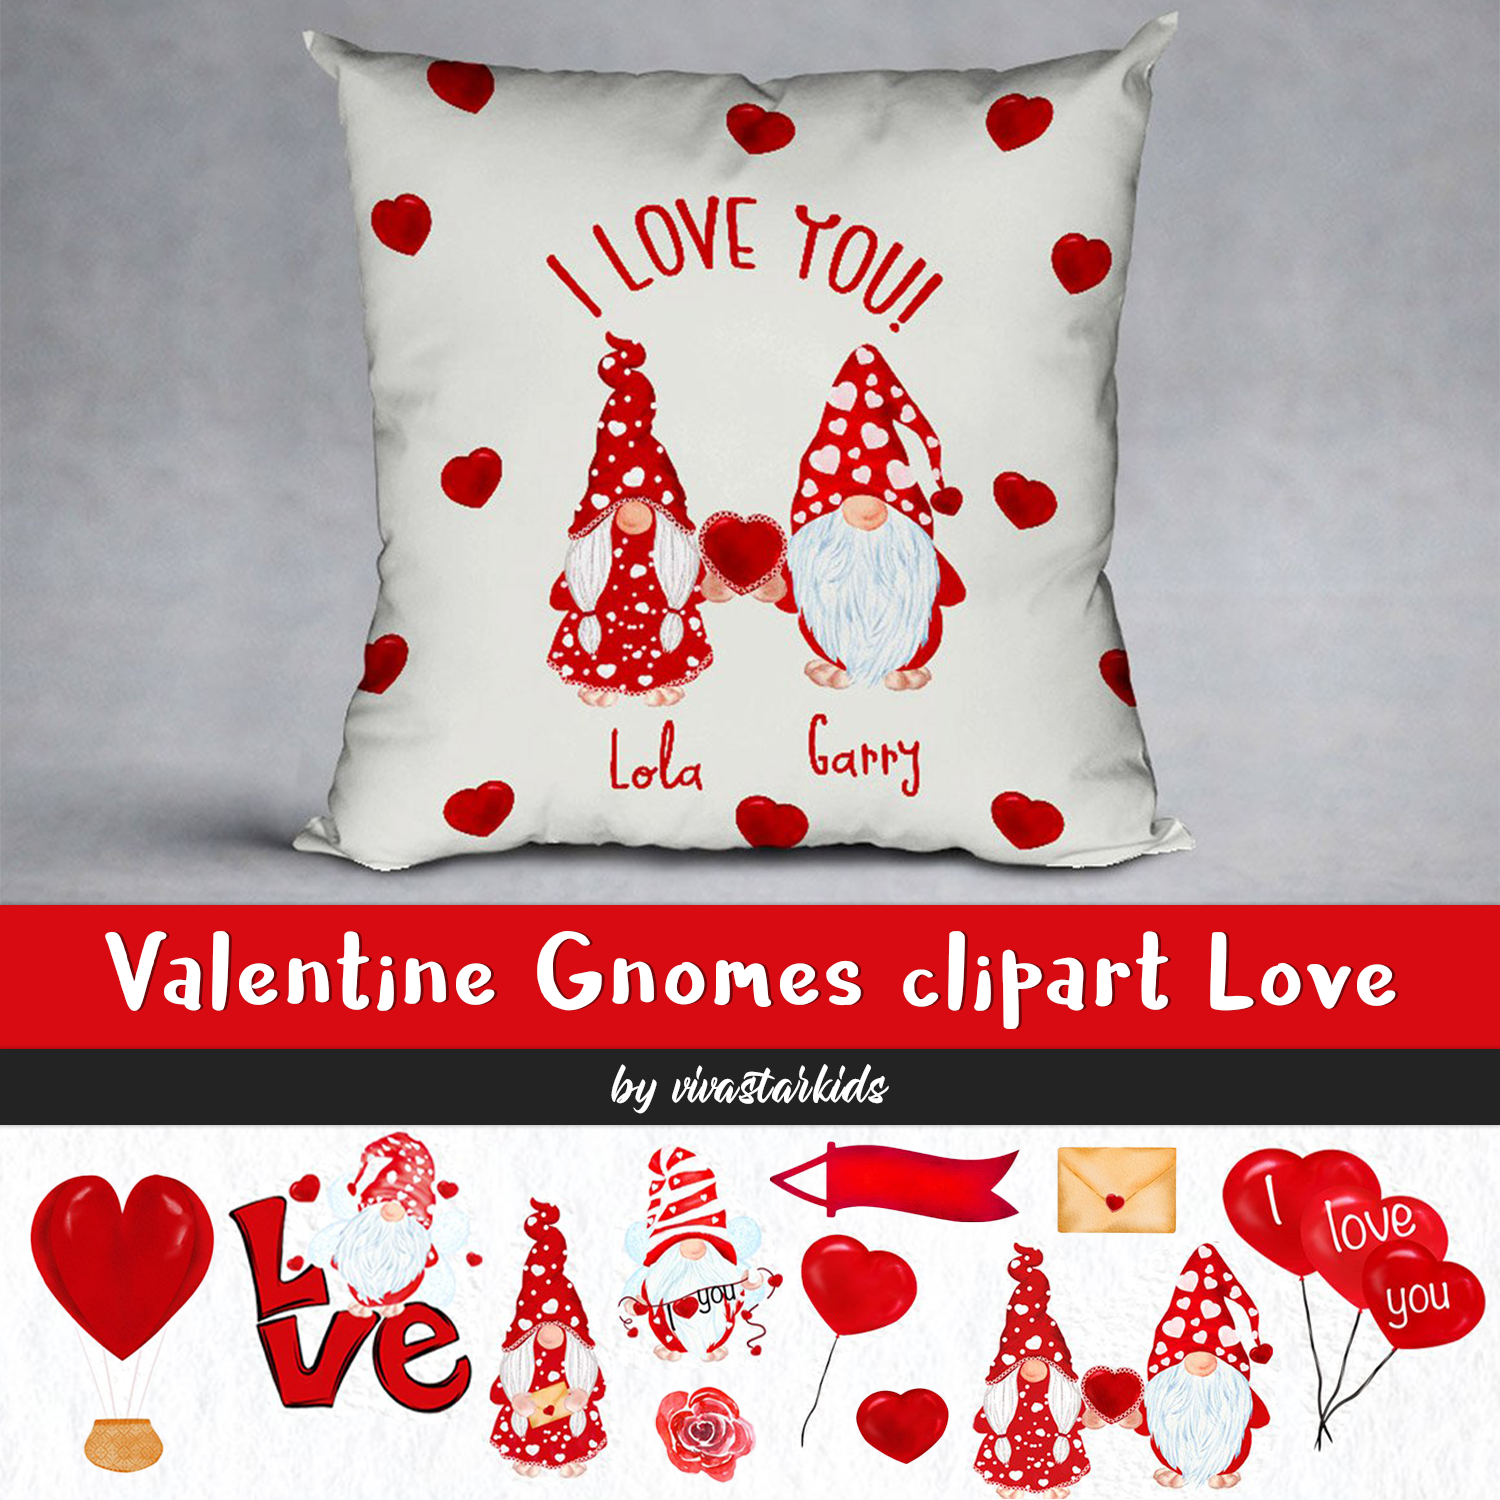 Valentine gnomes clipart love preview.